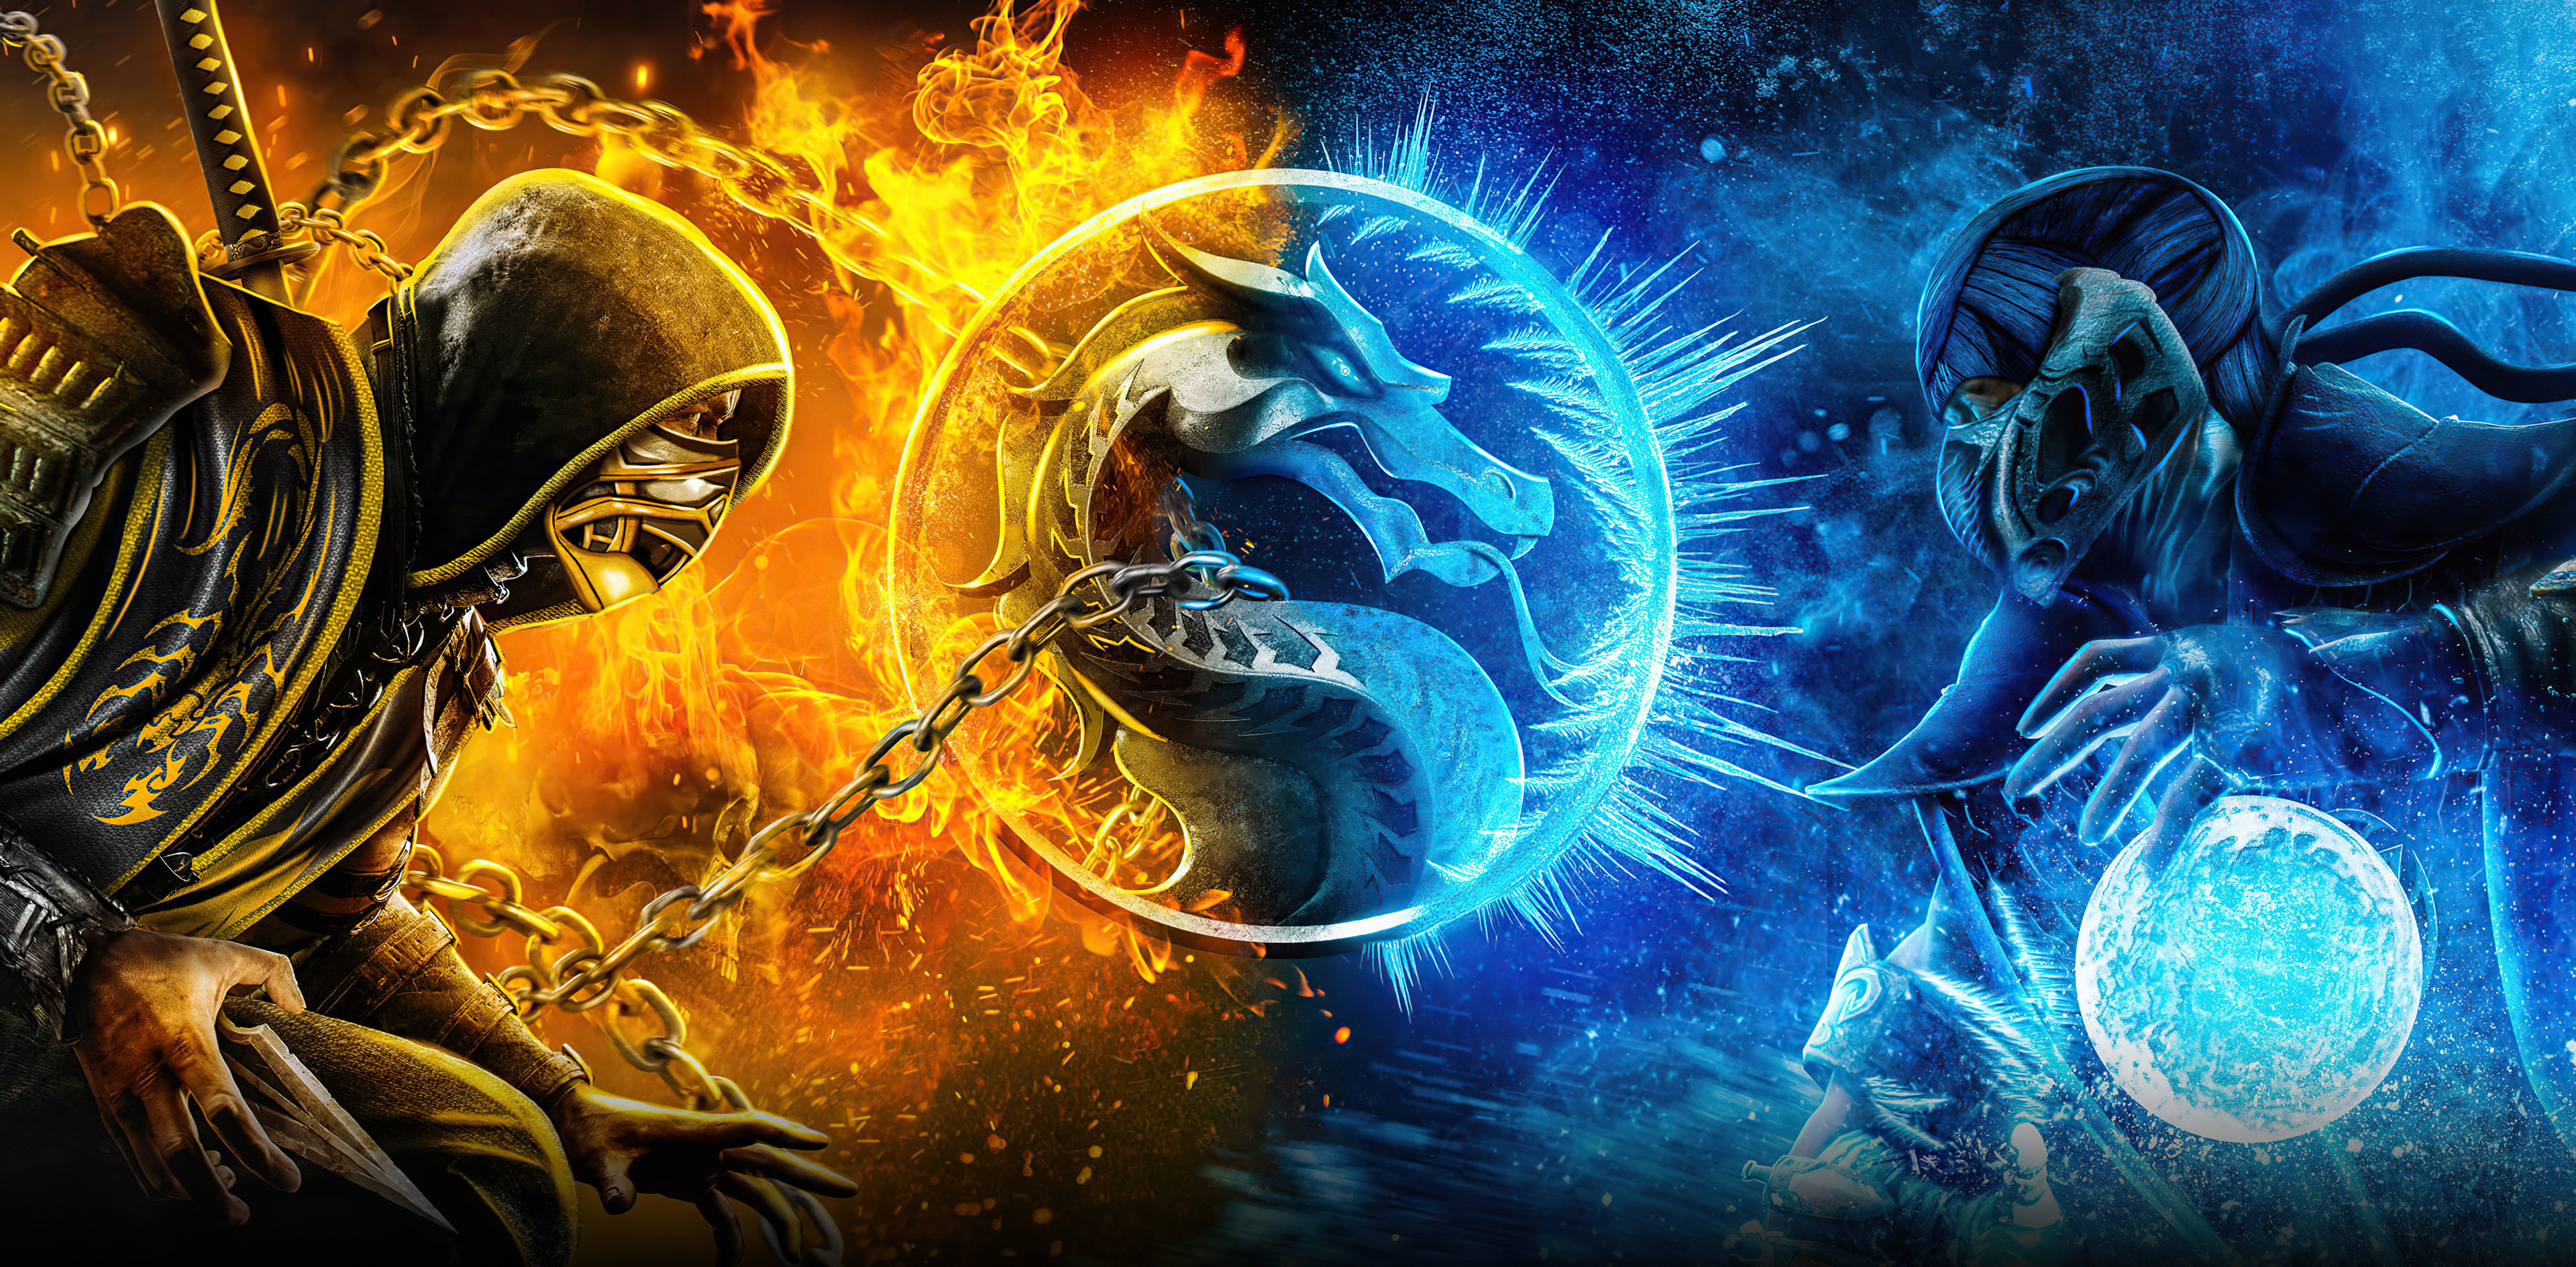 Mortal Kombat 11 HD Wallpapers Free Download  PixelsTalkNet